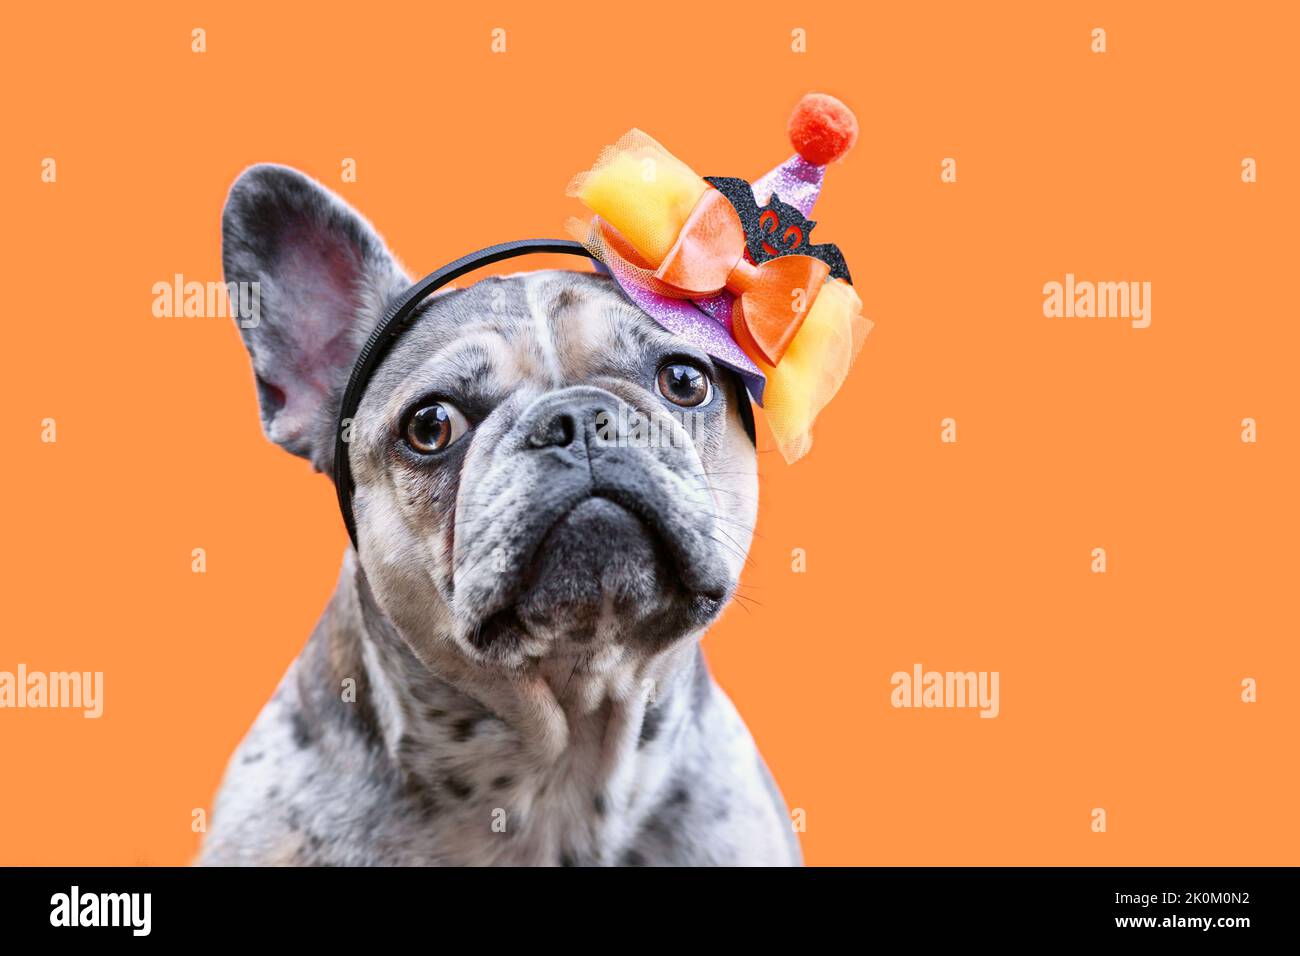 Portrait of merle French Bulldog dog with Halloween costume party hat on orange background Stock Photo